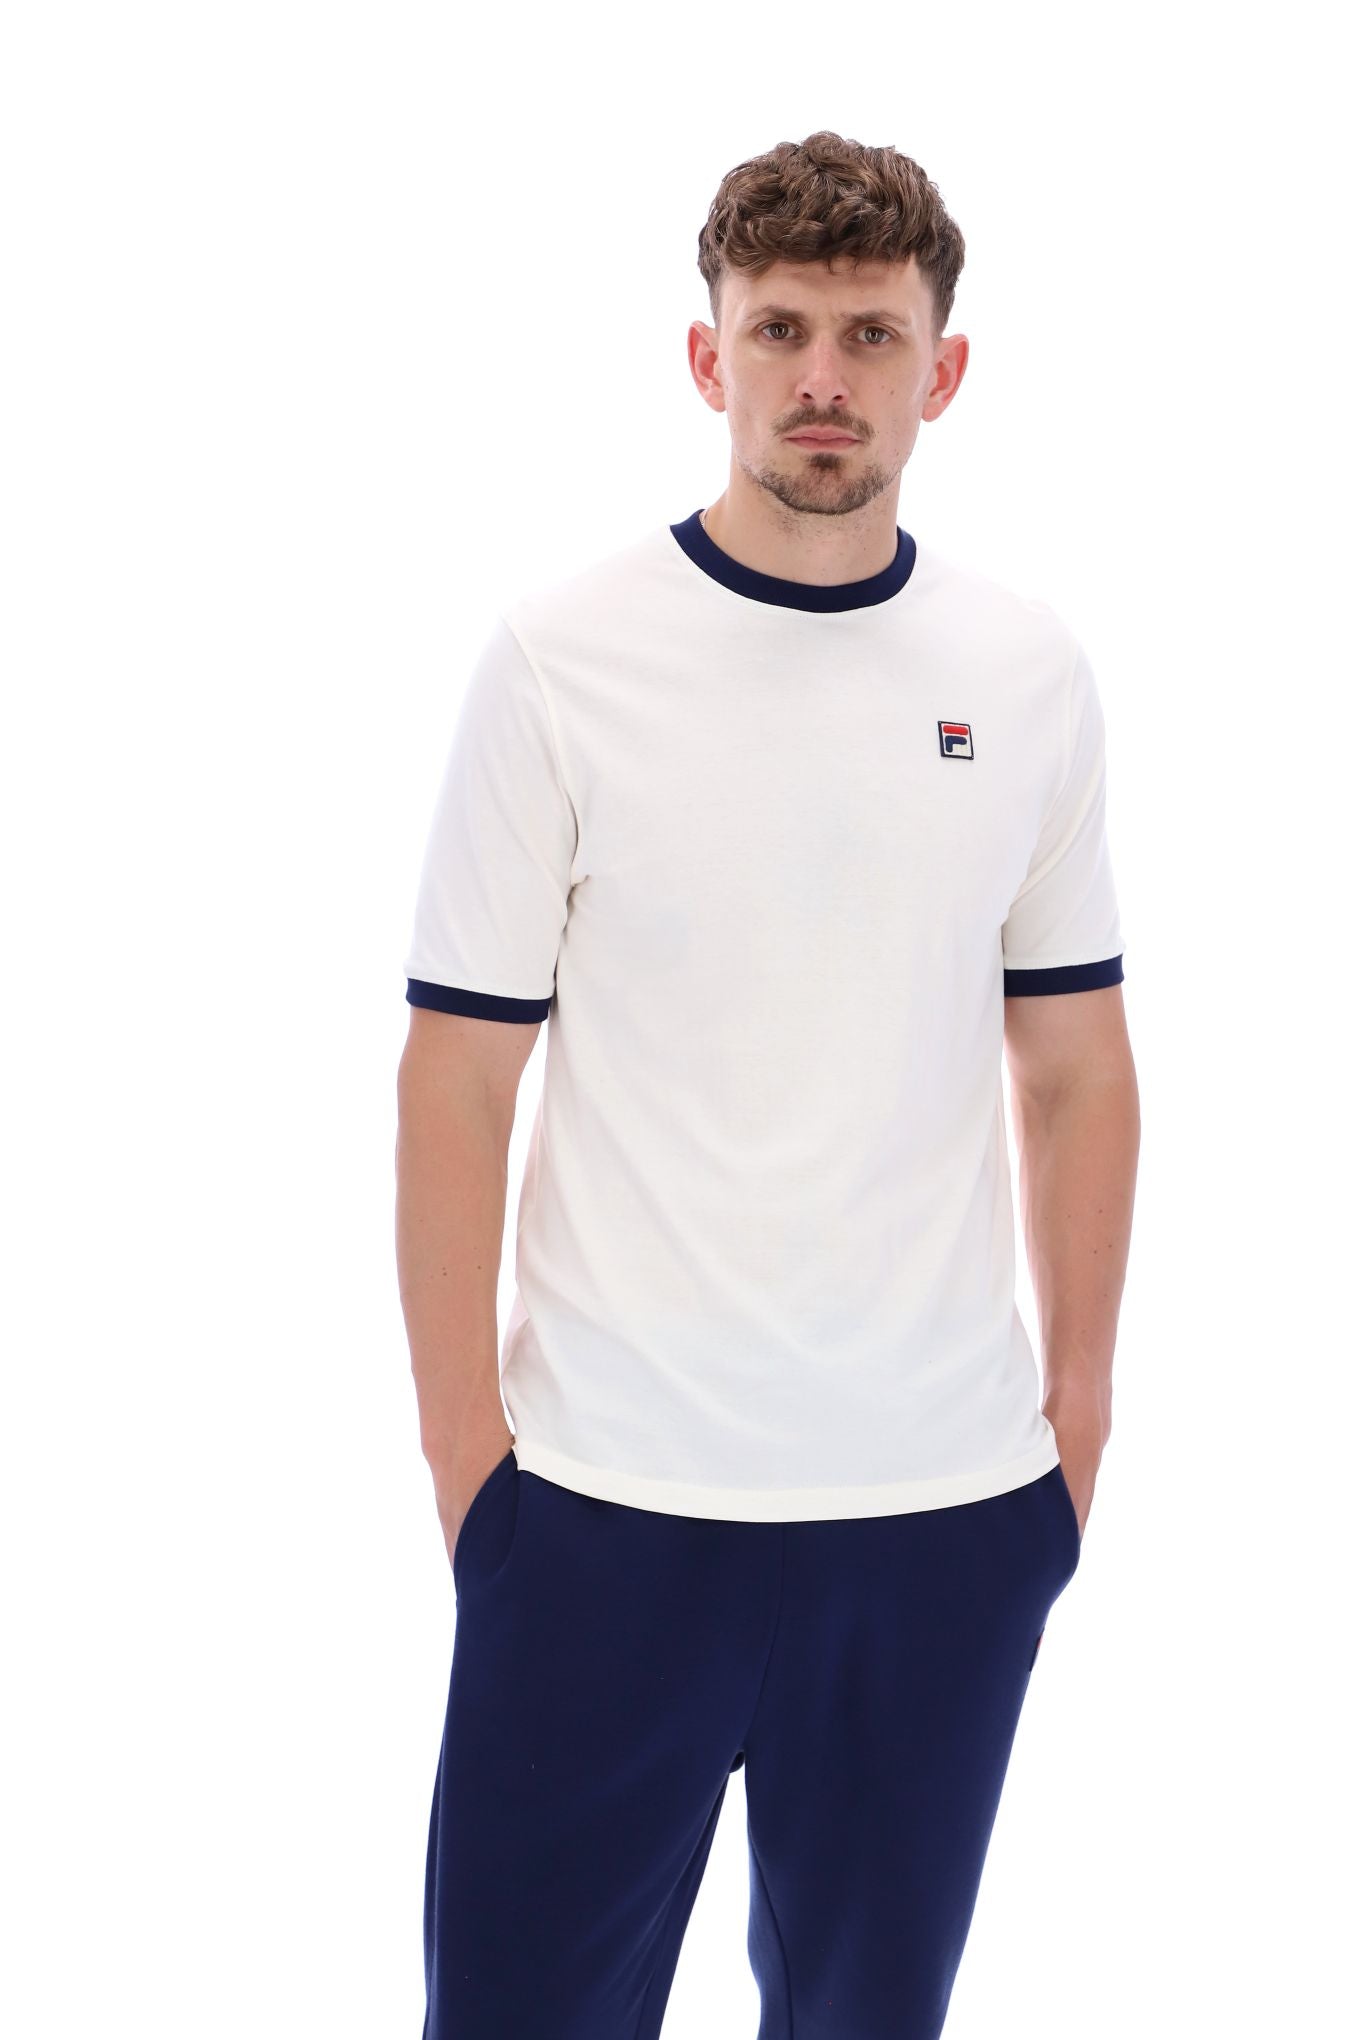 FILA Marconi T-shirt - White/Fila Navy